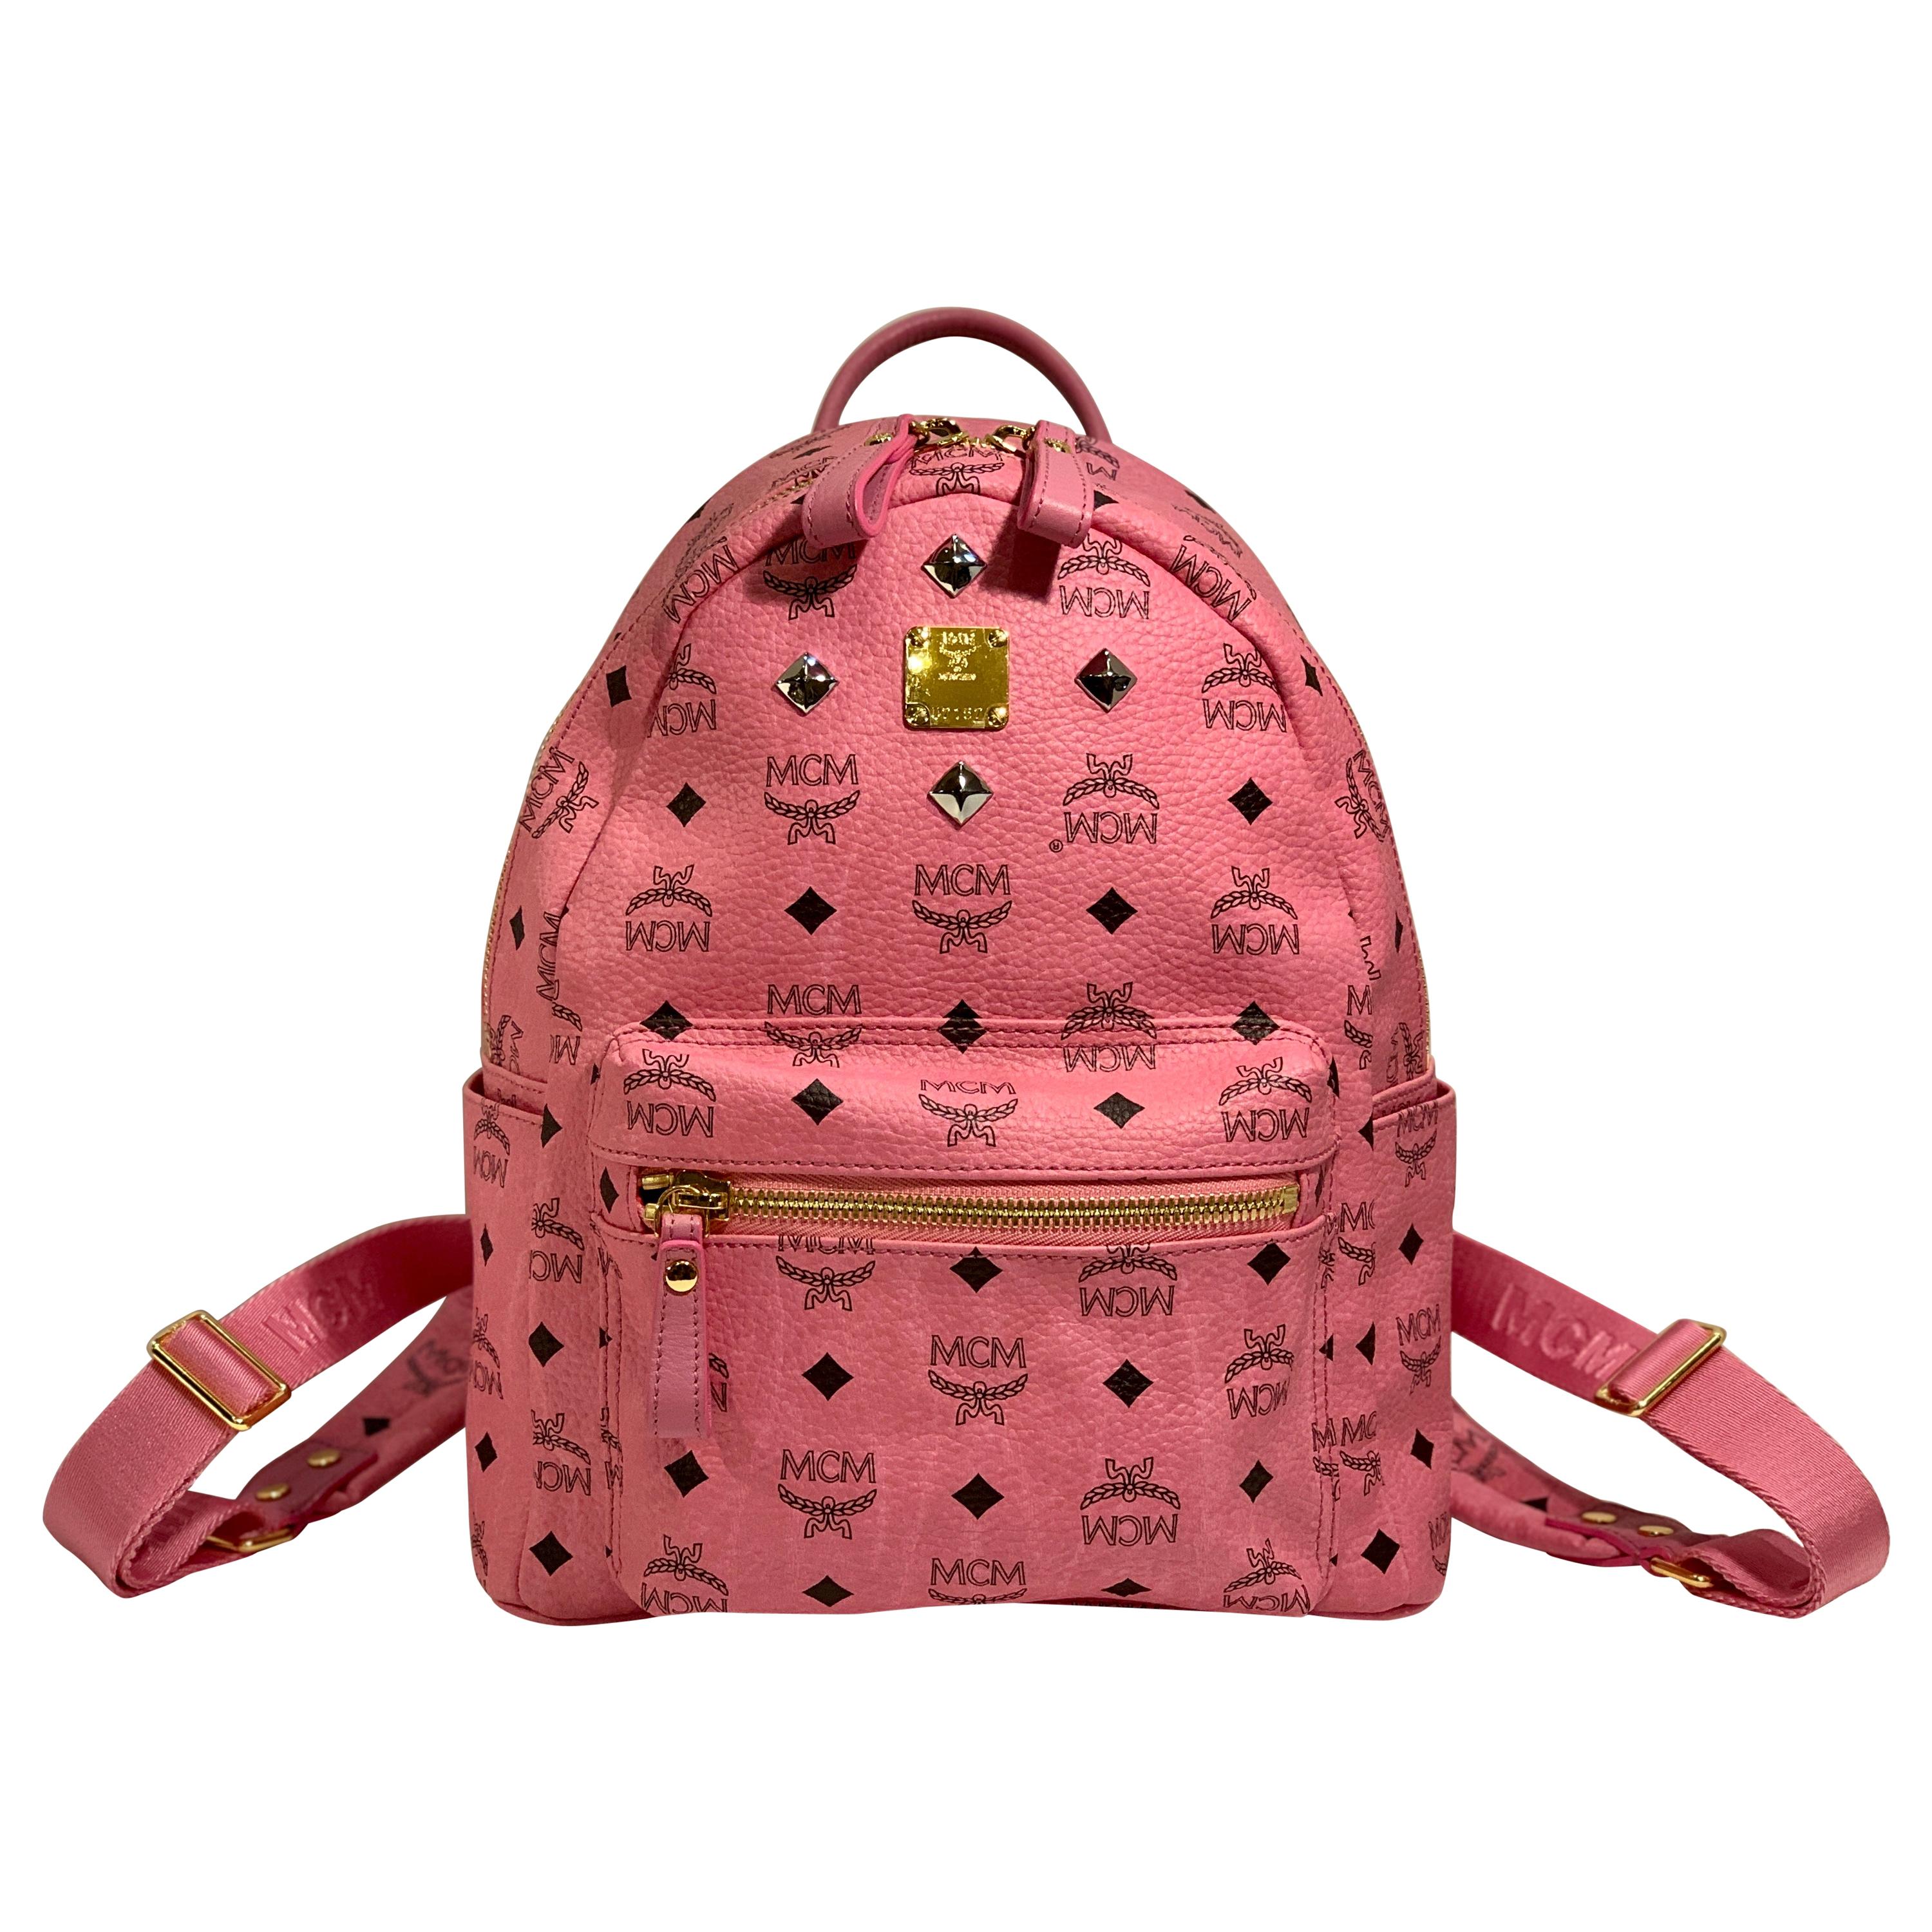 MCM Worldwide Medium Stark Backpack Pink and Black Visetos with